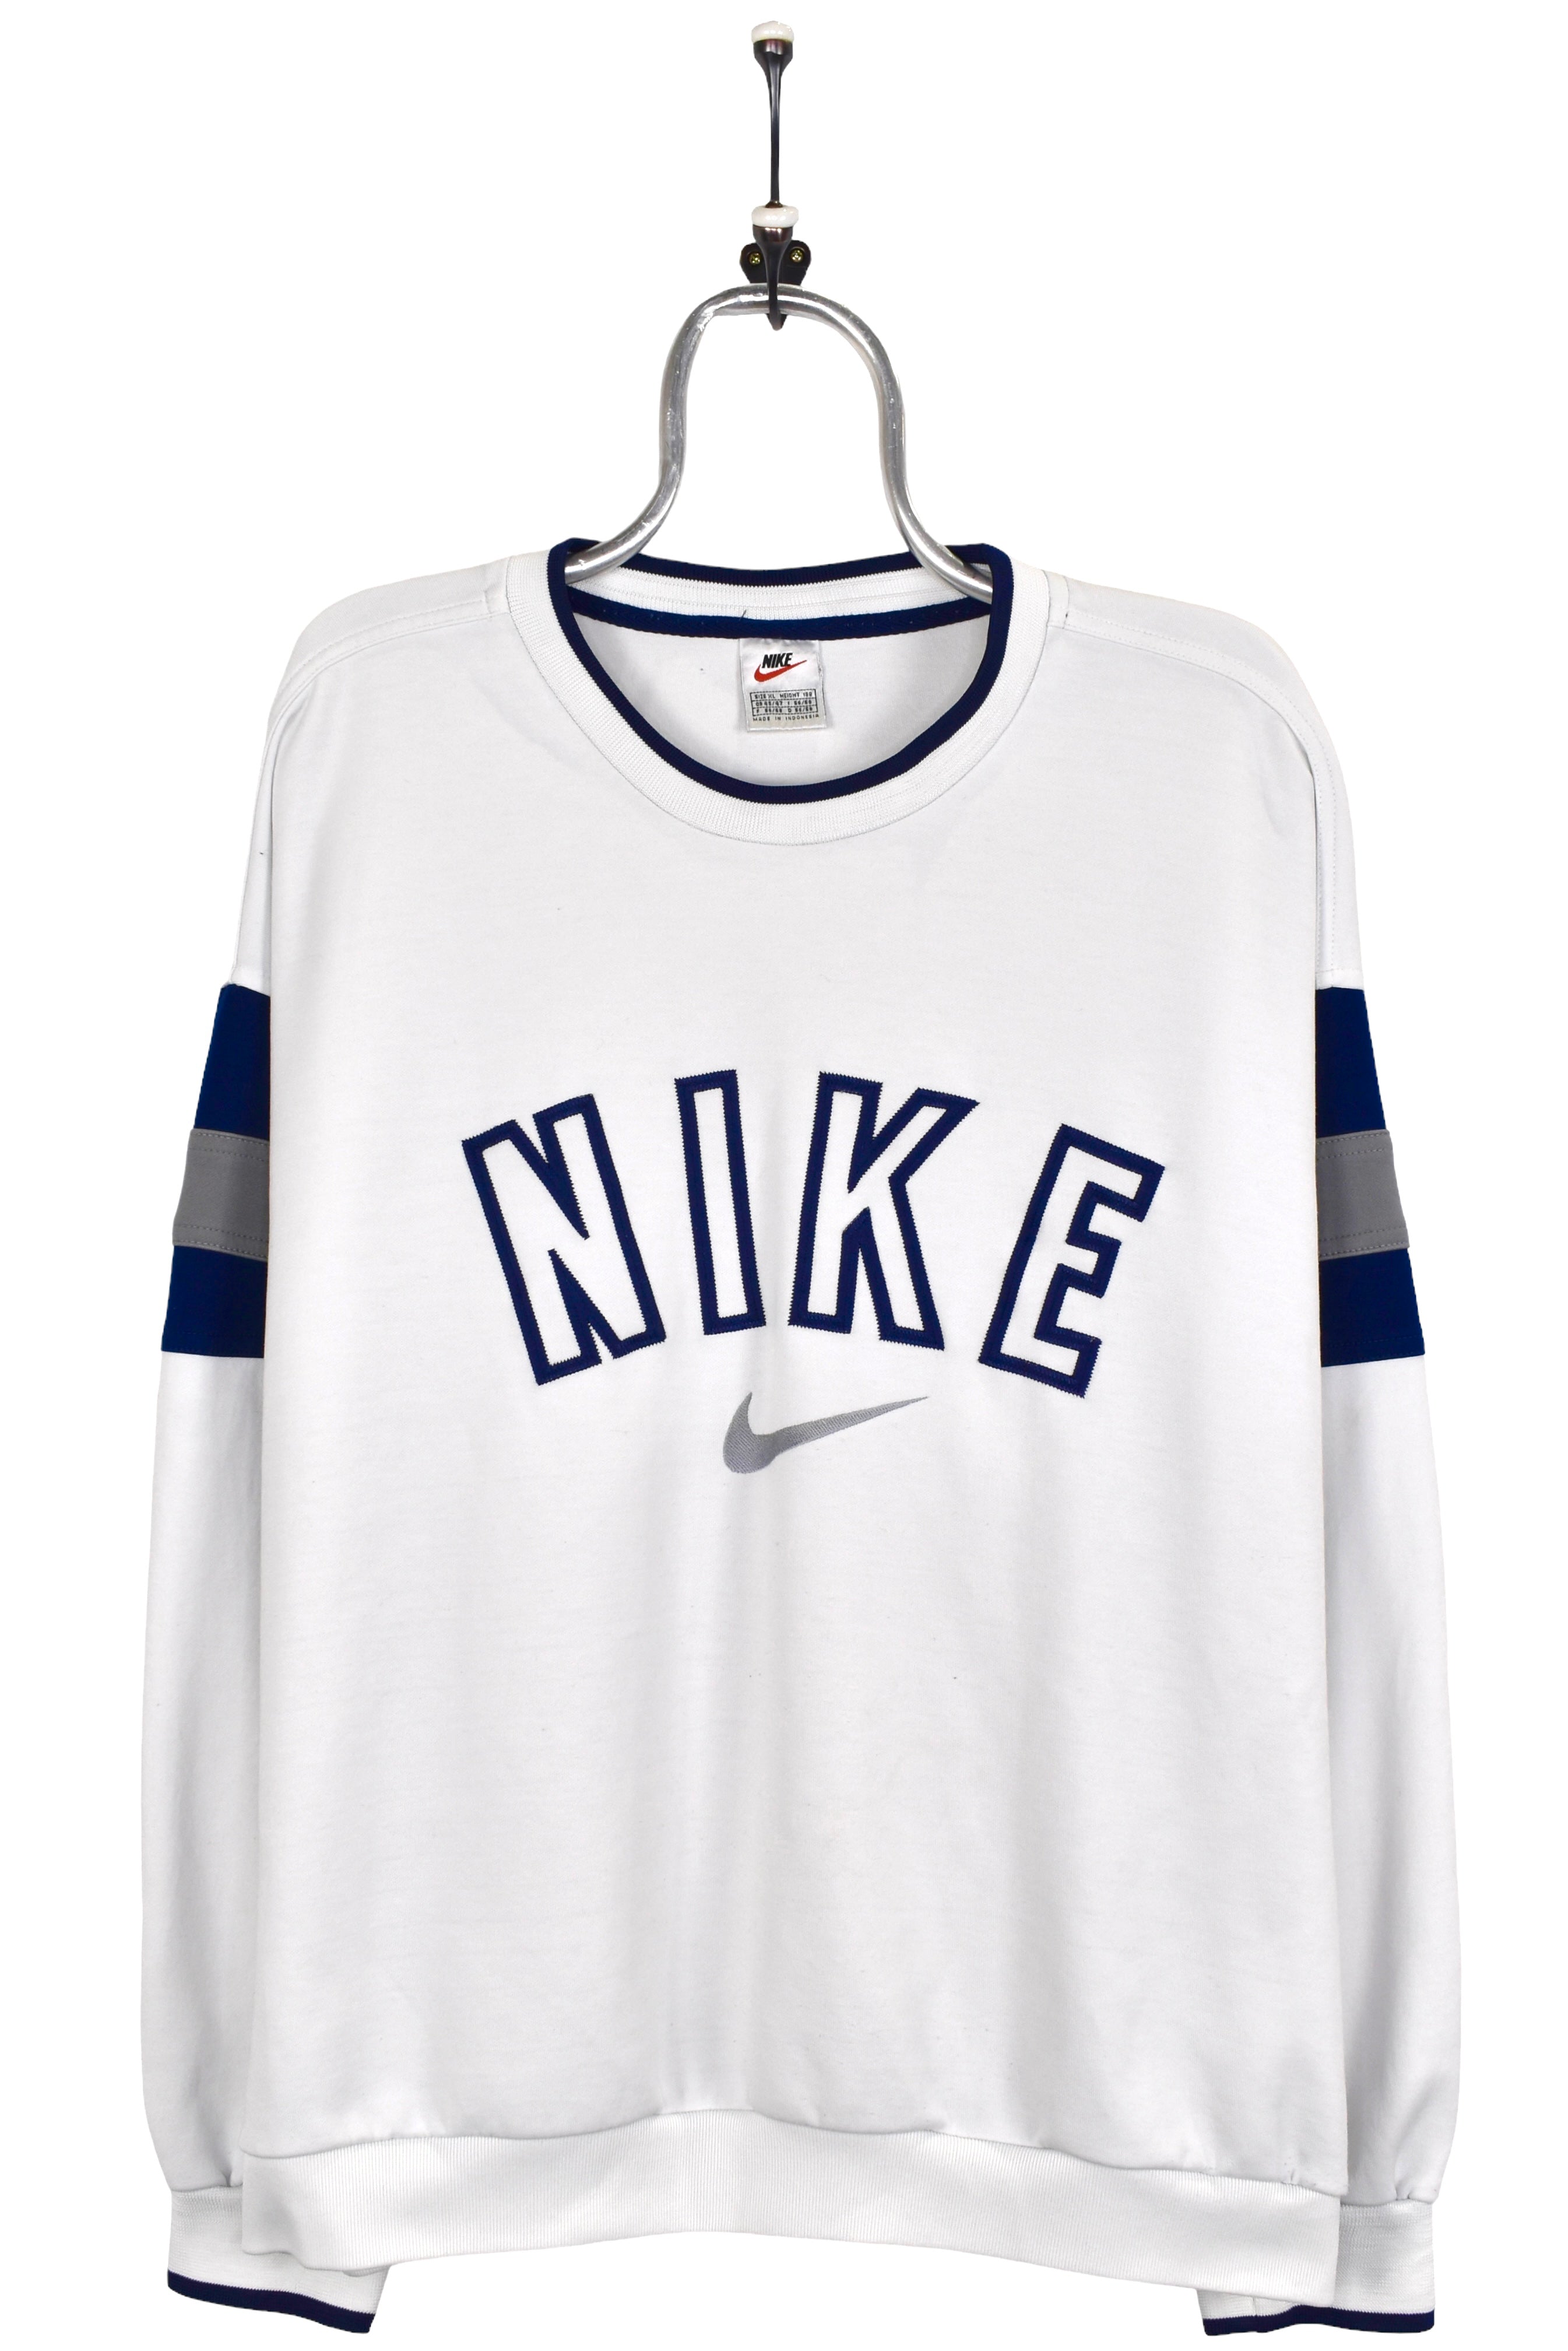 Vintage Nike sweatshirt, white embroidered crewneck - XL